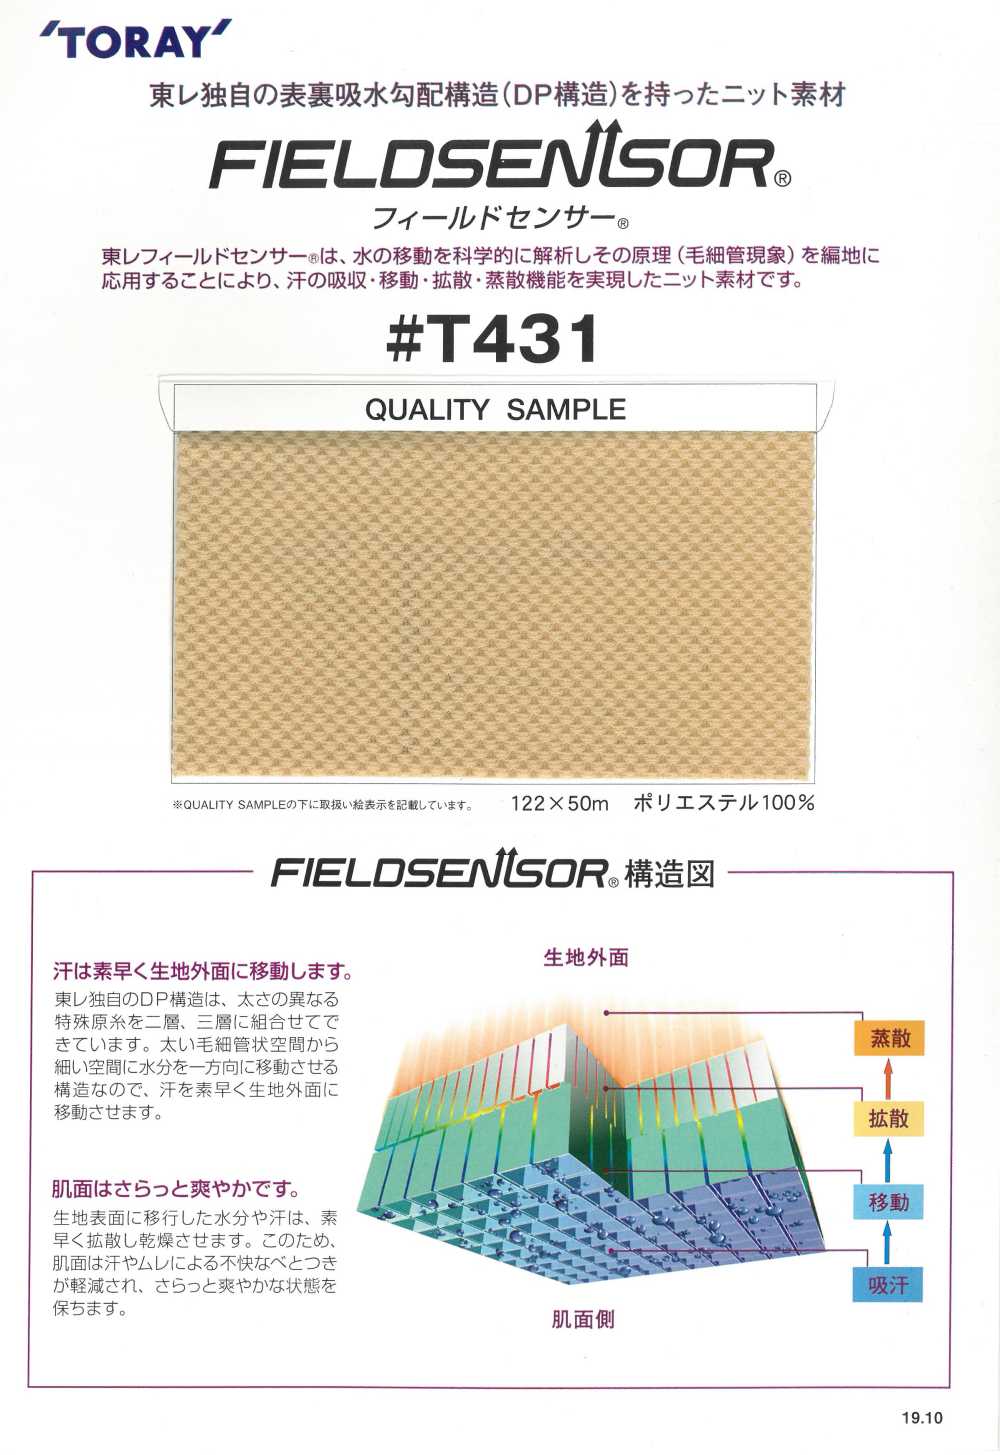 T431 TORAY Field Sensor® Strickmaterial Für Unterbekleidung[Textilgewebe] Tamurakoma